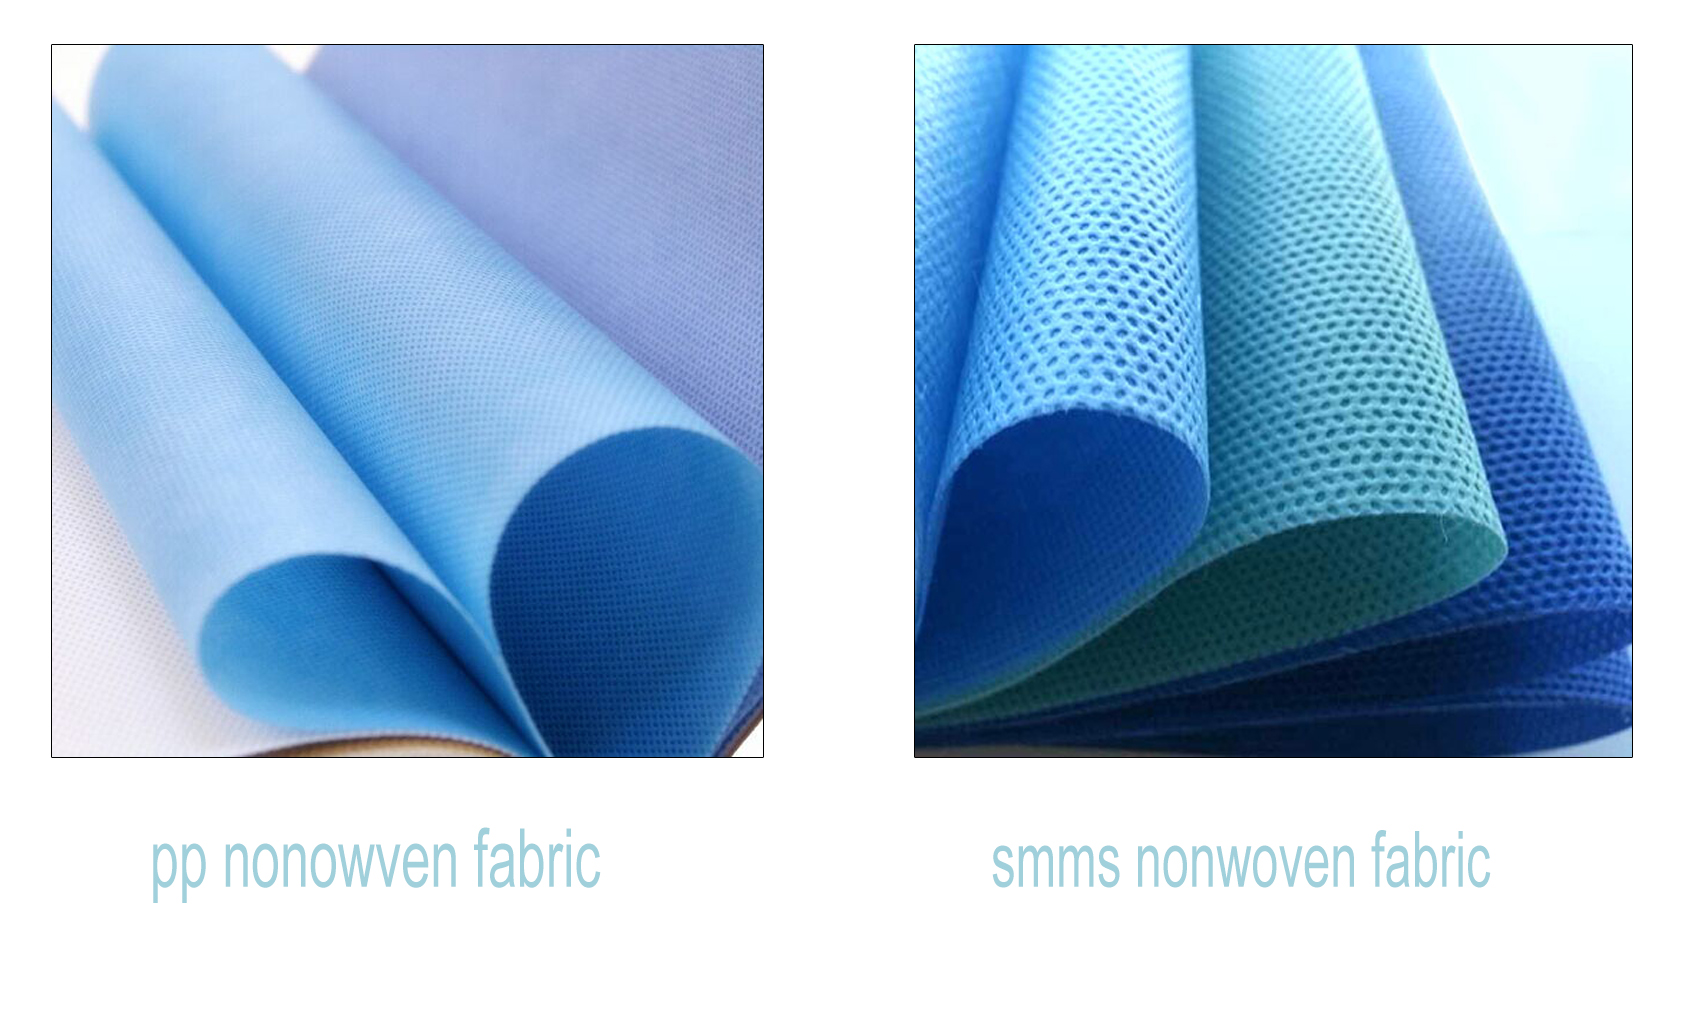 How to tell medical smms non-woven & pp non-woven fabrics?